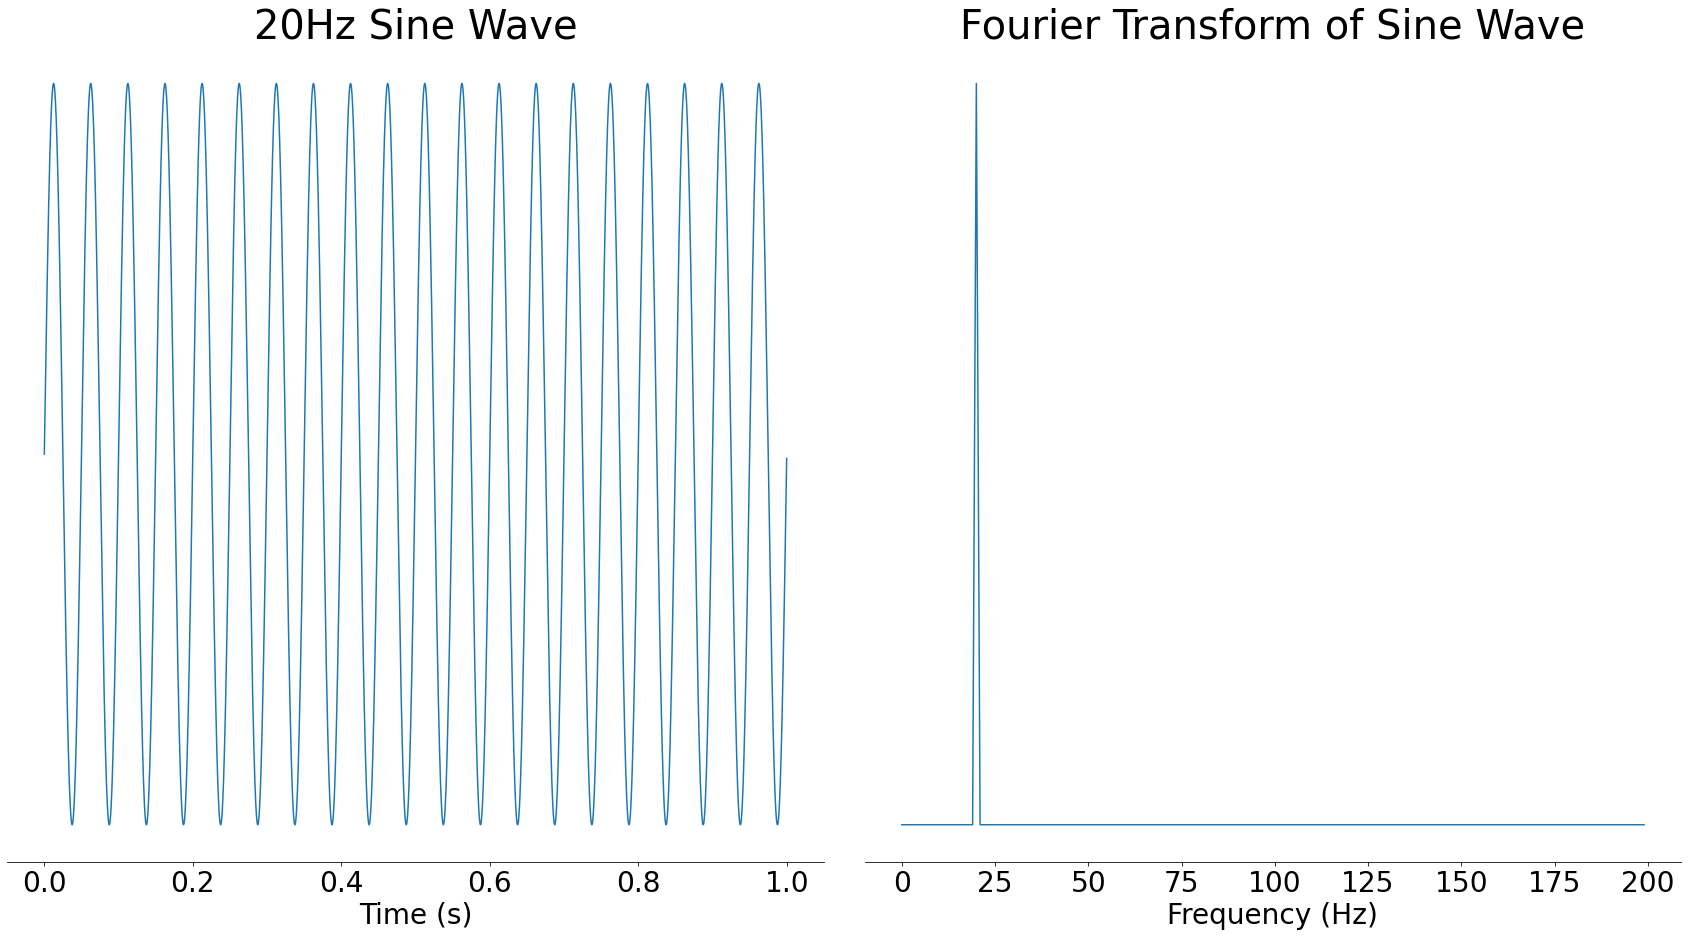 20Hz sine wave and its Fourier transform